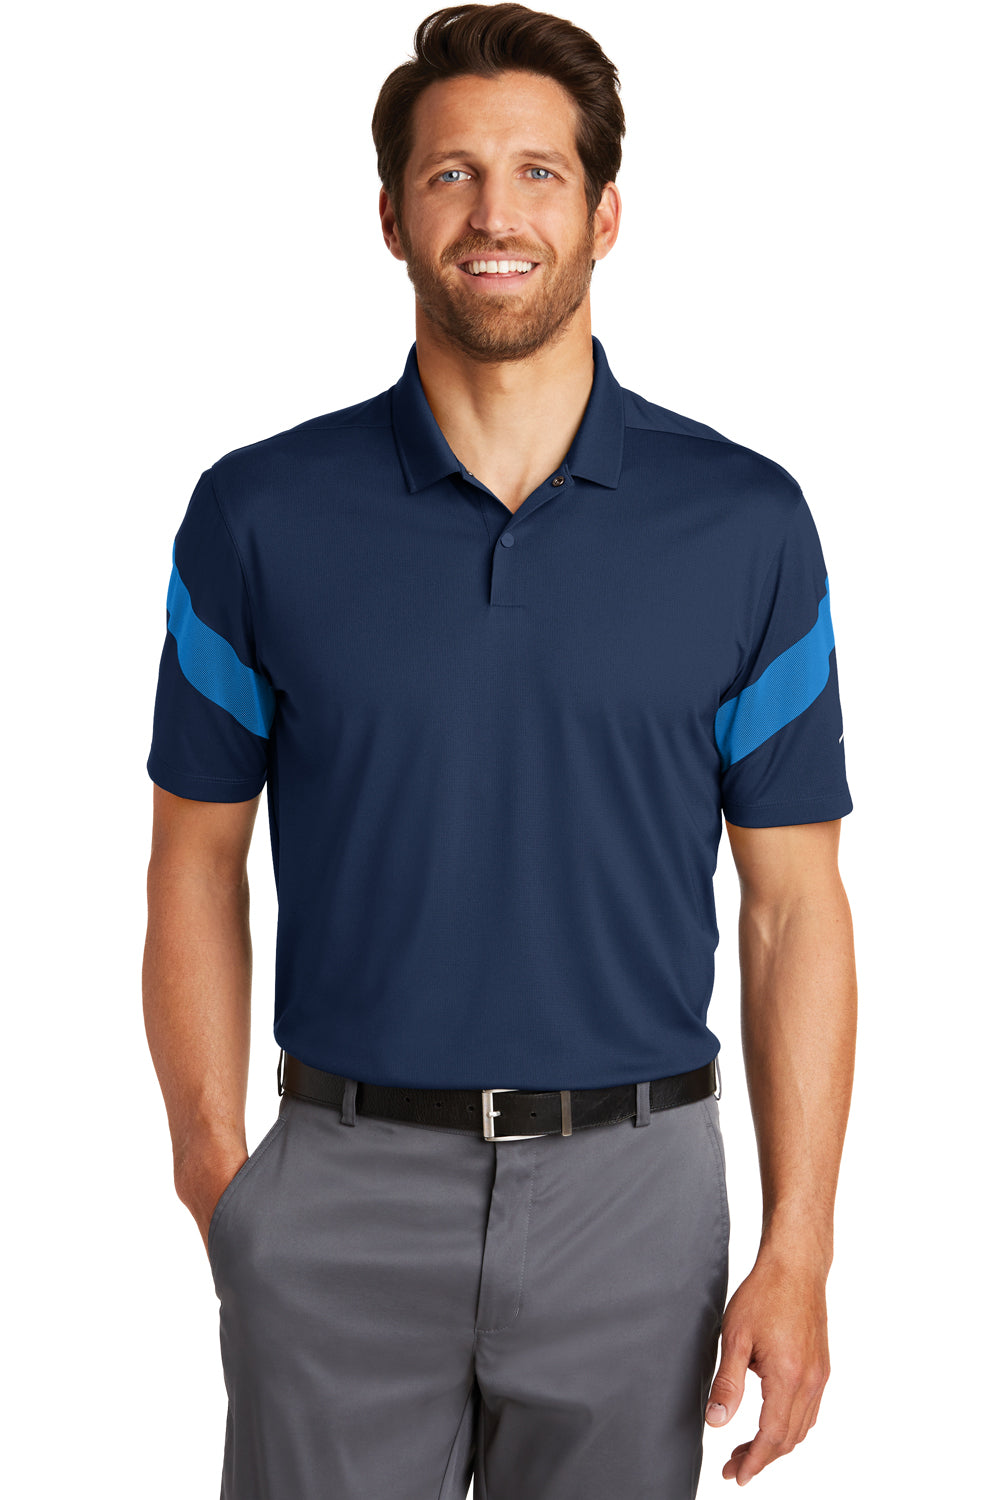 Nike 881657 Mens Commander Dri-Fit Moisture Wicking Short Sleeve Polo Shirt Navy Blue/Photo Blue Front